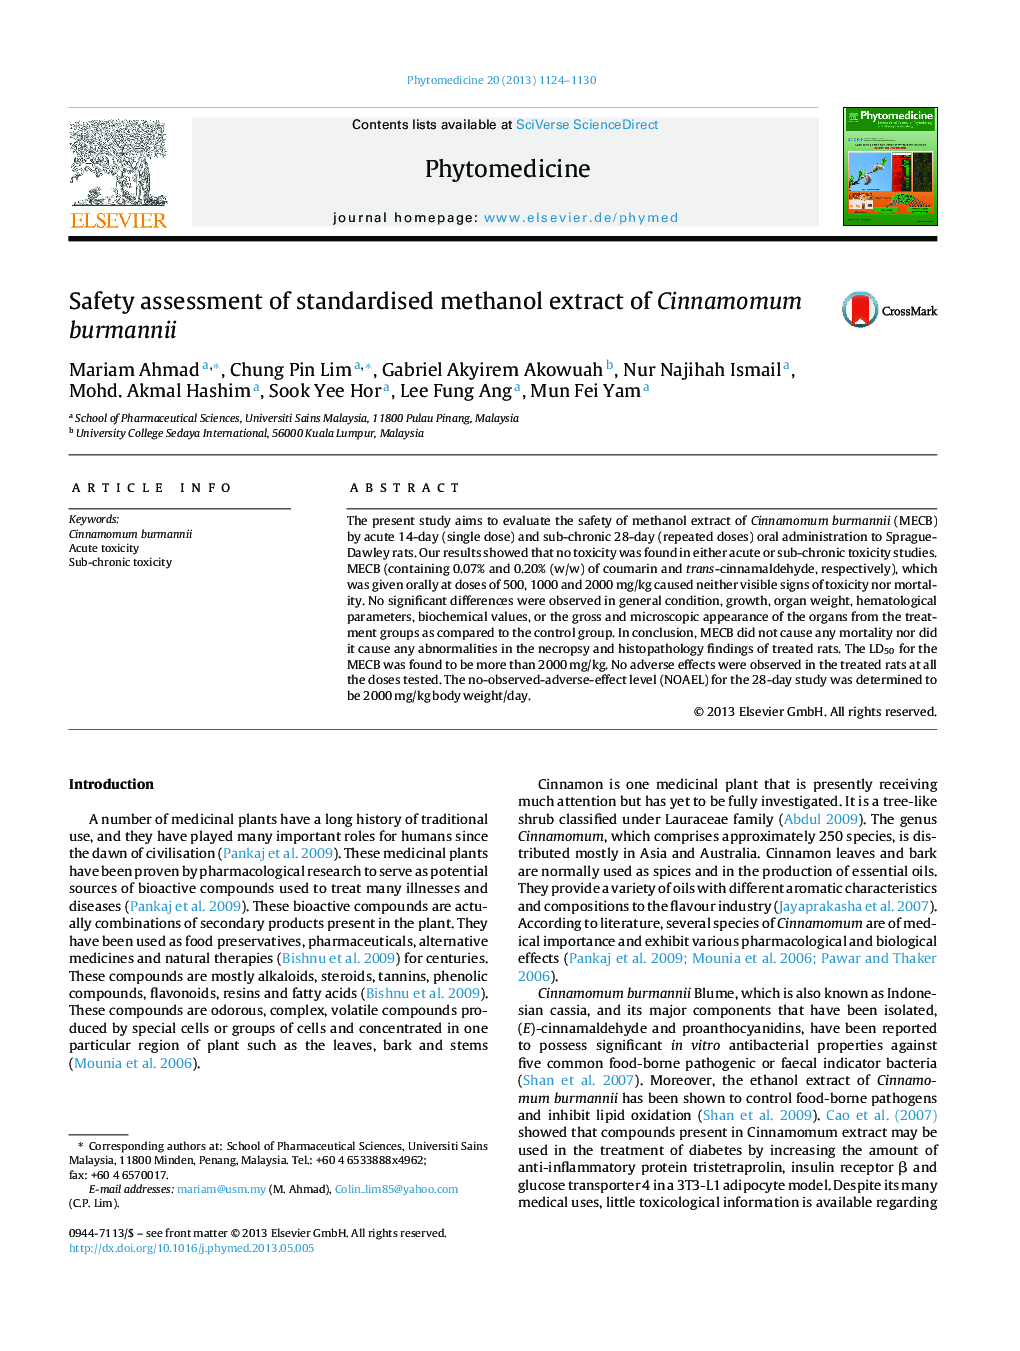 Safety assessment of standardised methanol extract of Cinnamomum burmannii